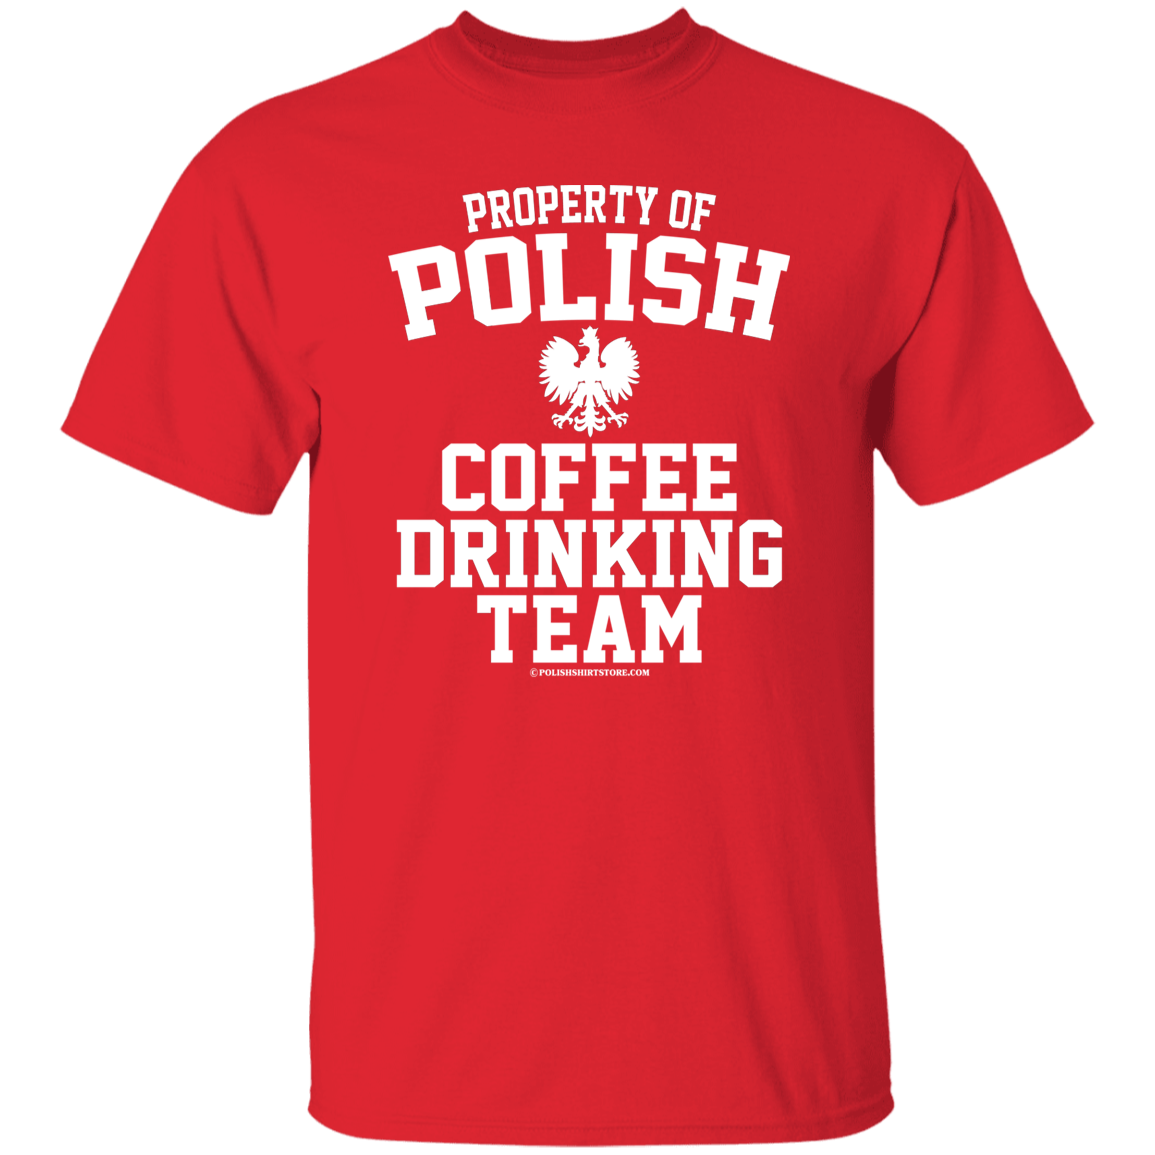 Property of Polish Coffee Drinking Team Apparel CustomCat G500 5.3 oz. T-Shirt Red S